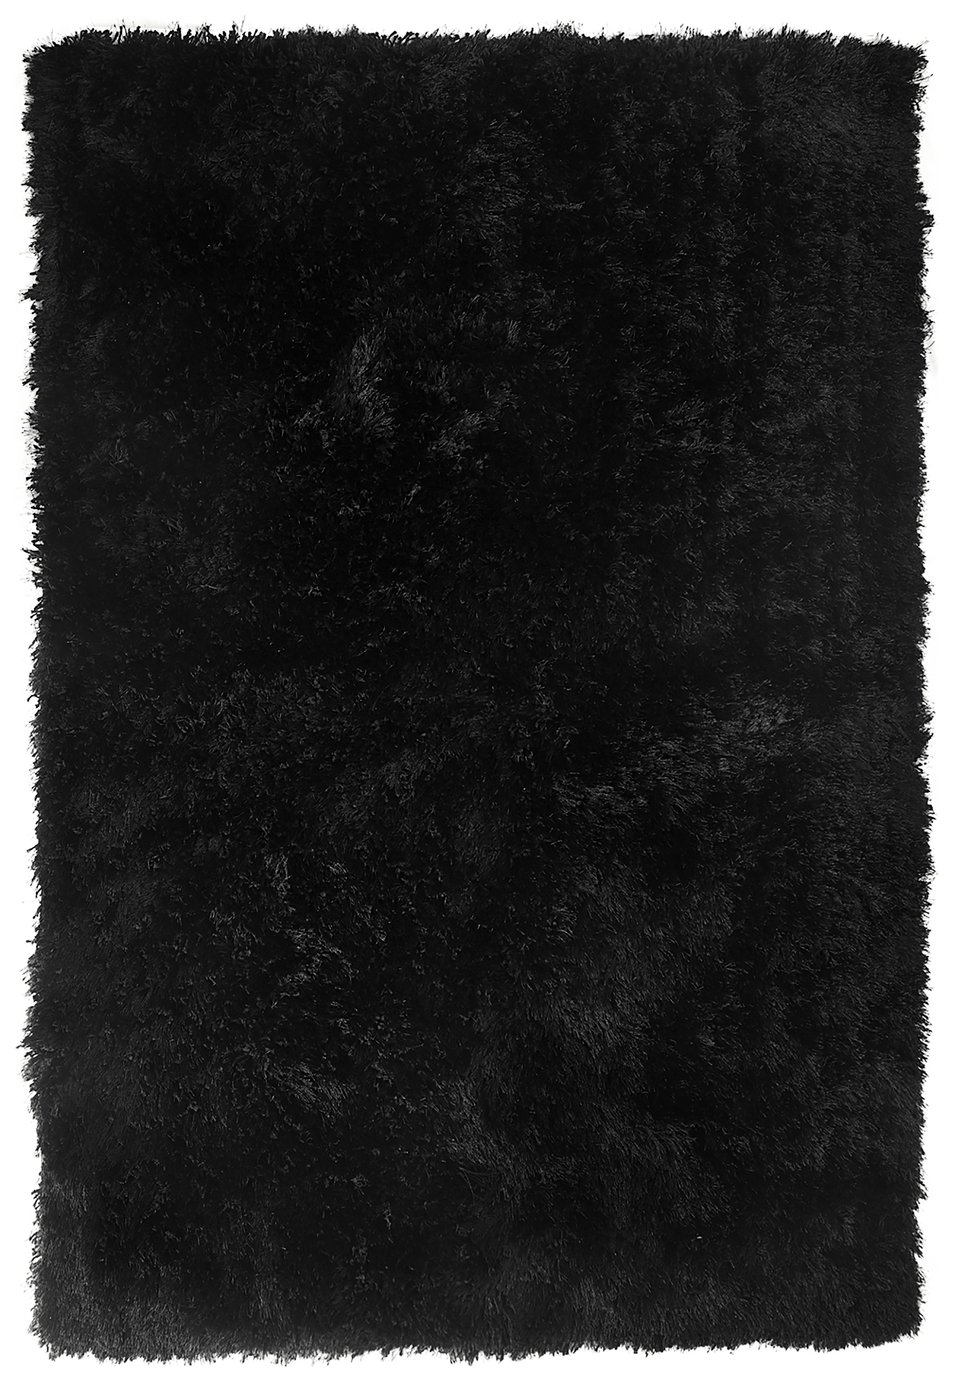  Habitat Luxury Plain Shaggy Rug - 120x170cm - Black